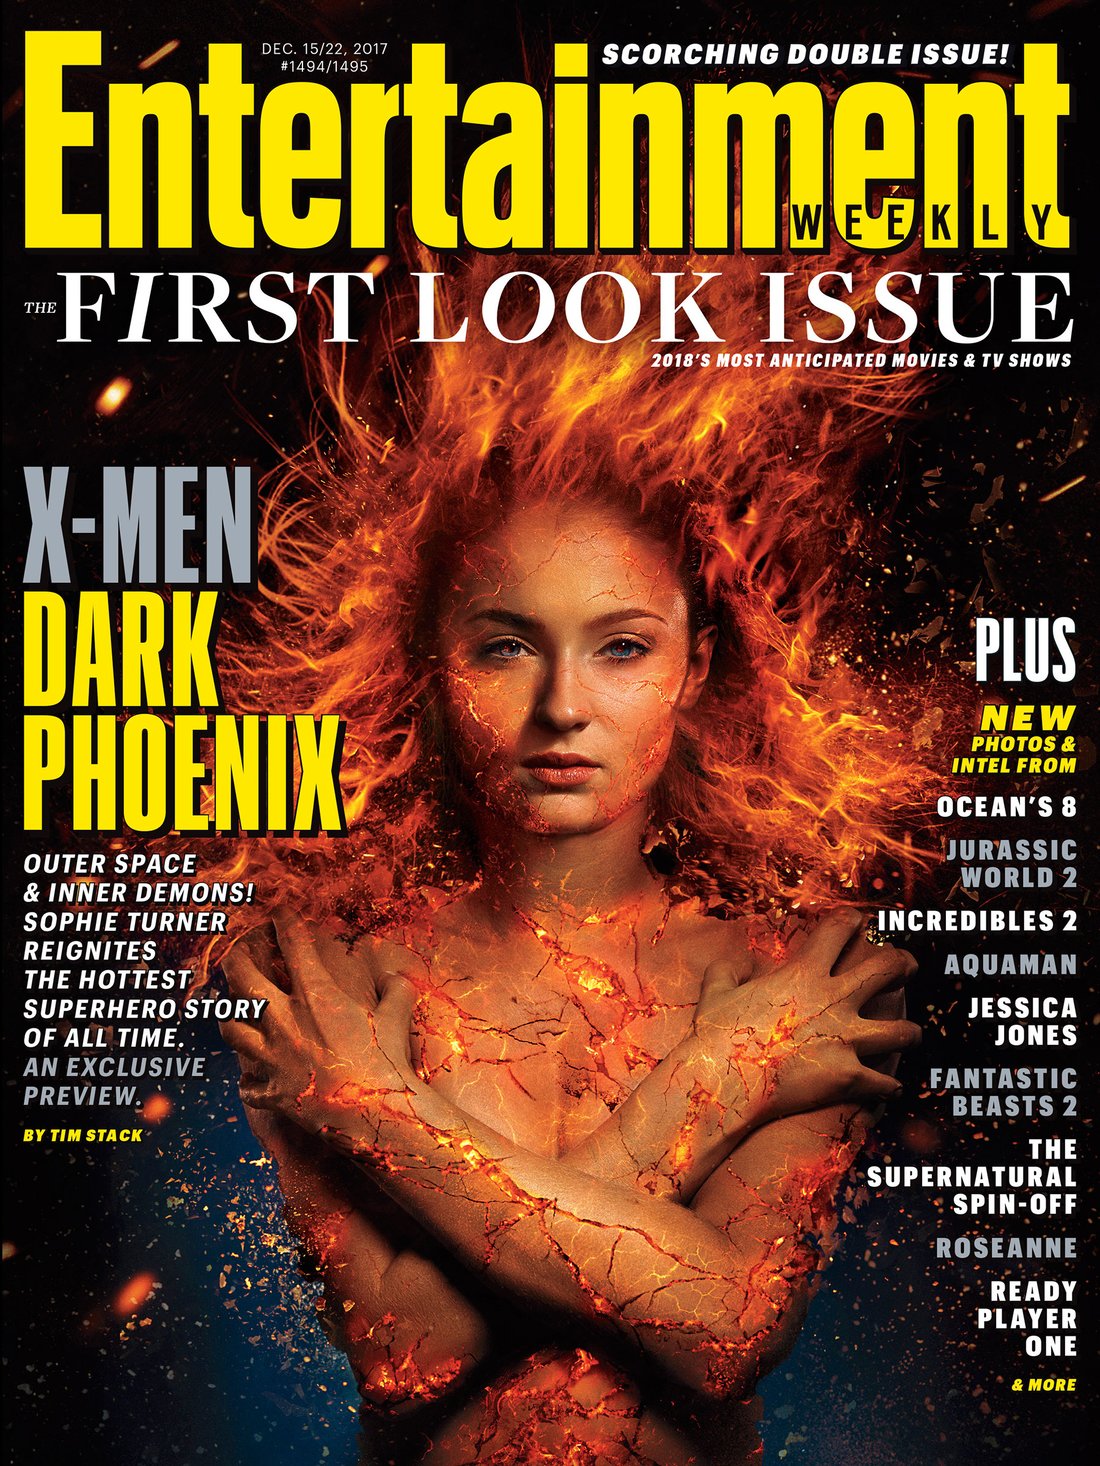 X-Men: Dark Phoenix Entertainment Weekly December 2017 Cover